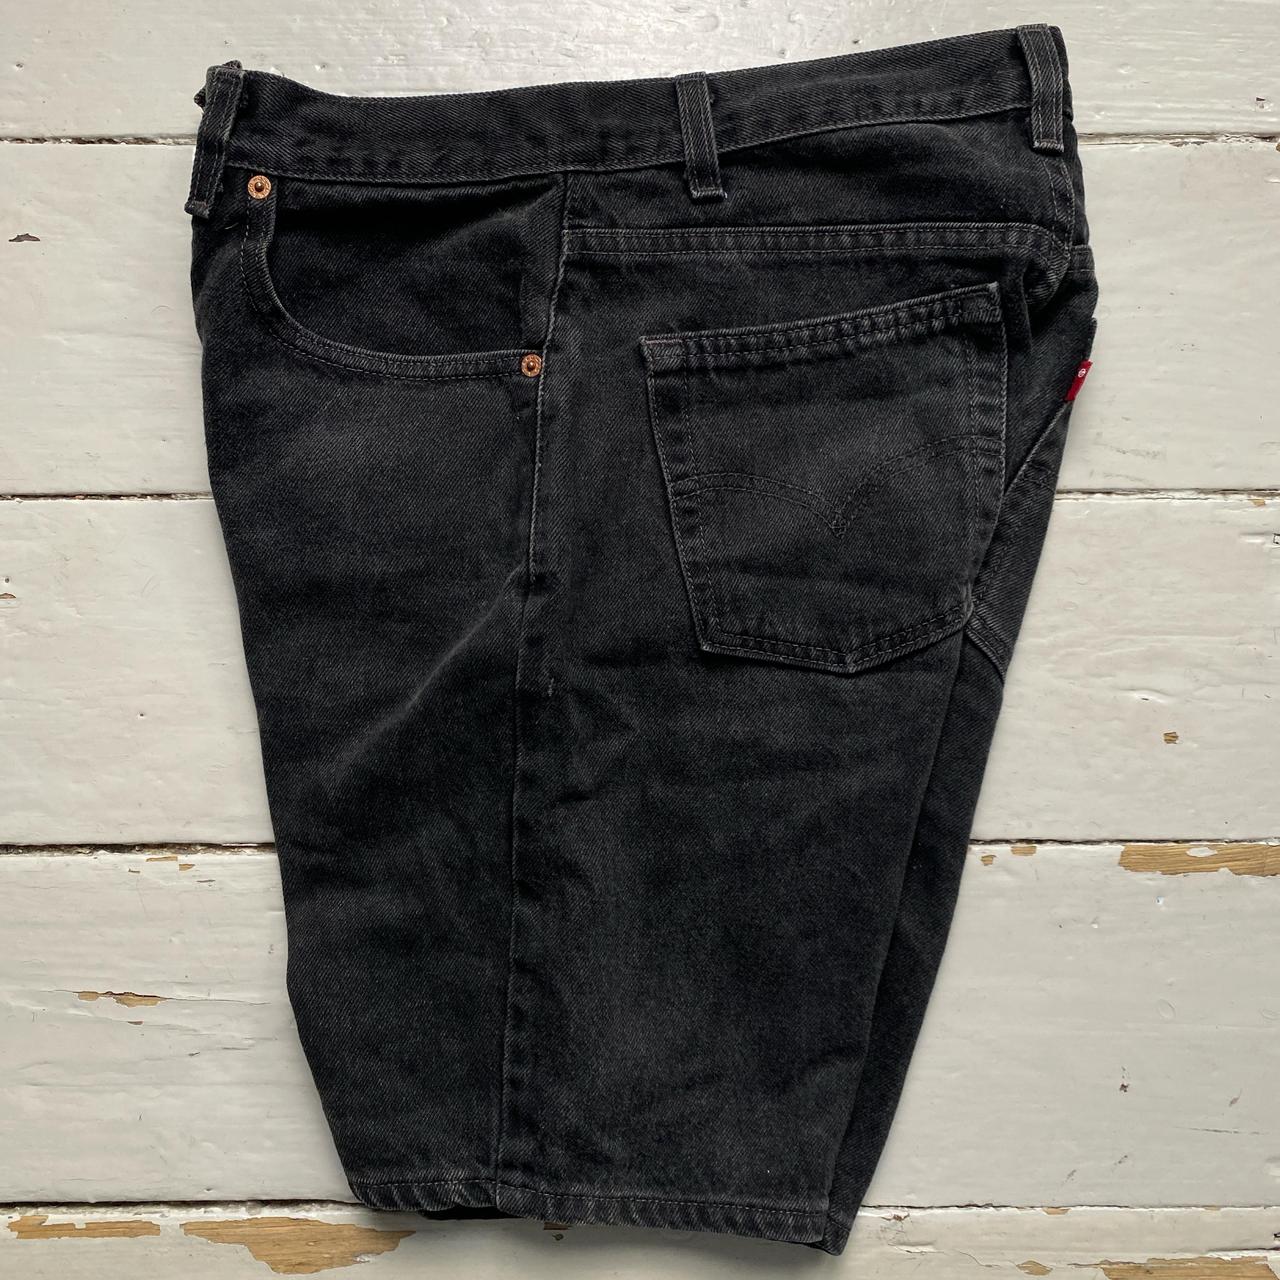 Levis 505 Grey Jean Jorts Shorts